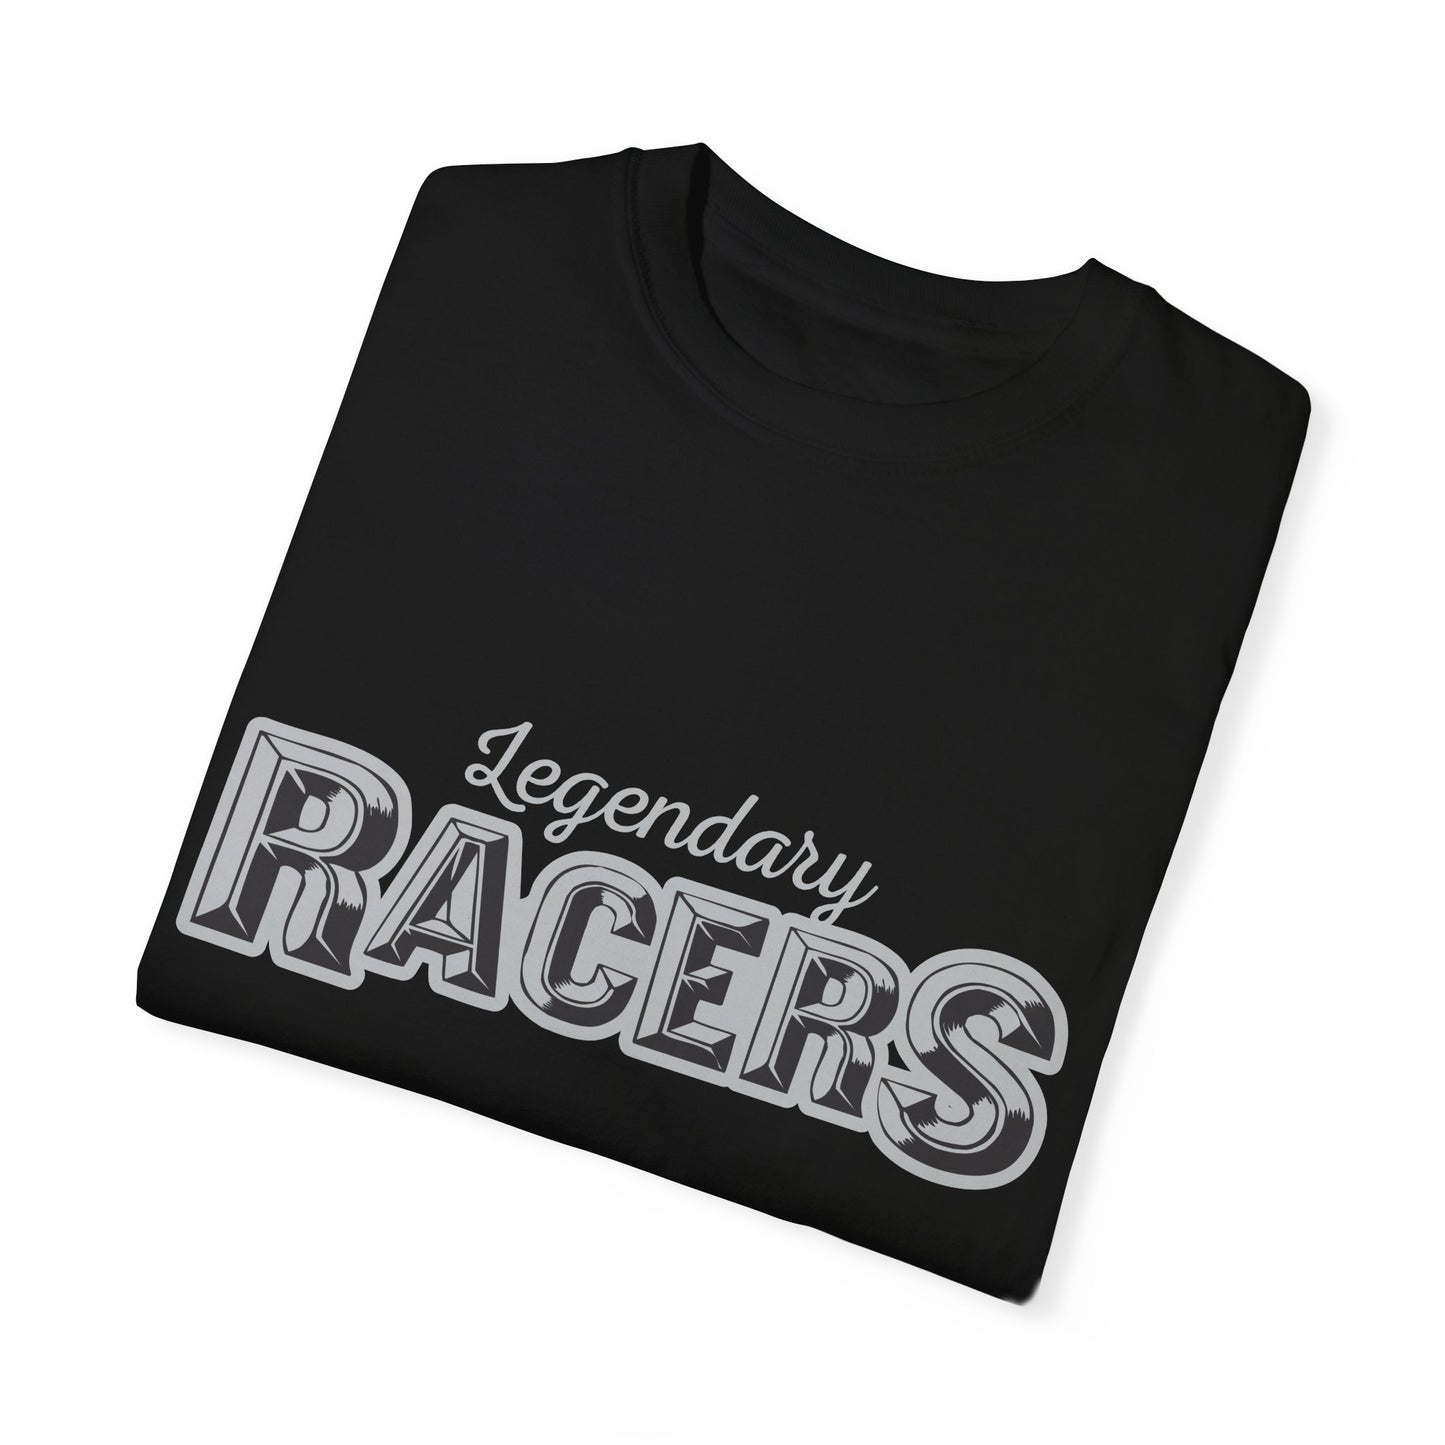 Legendary Racers Tee (Unisex Garment-Dyed T-shirt)